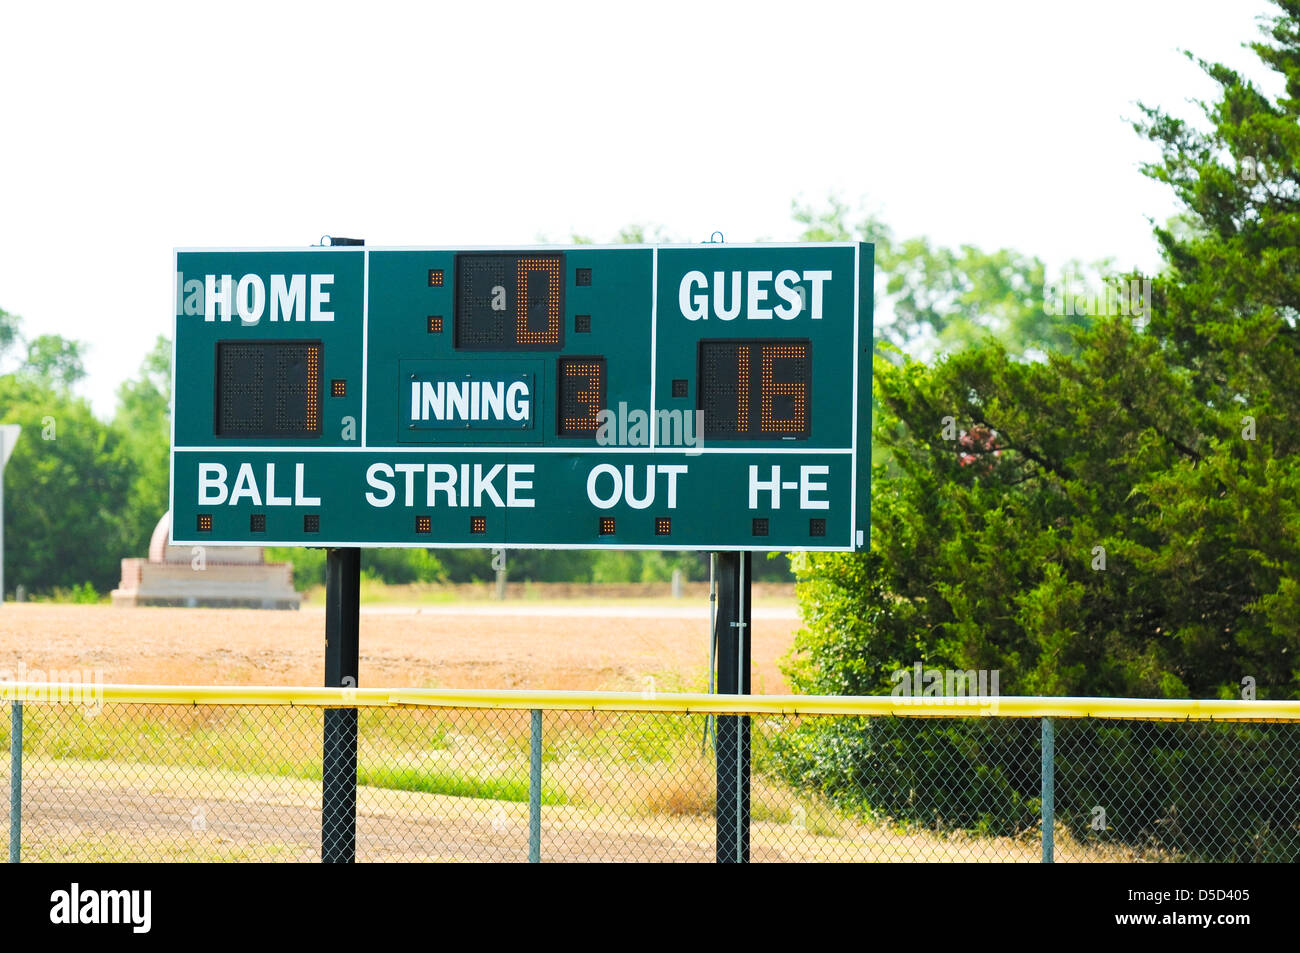 A scoreboard for baseball game. Stock Photo